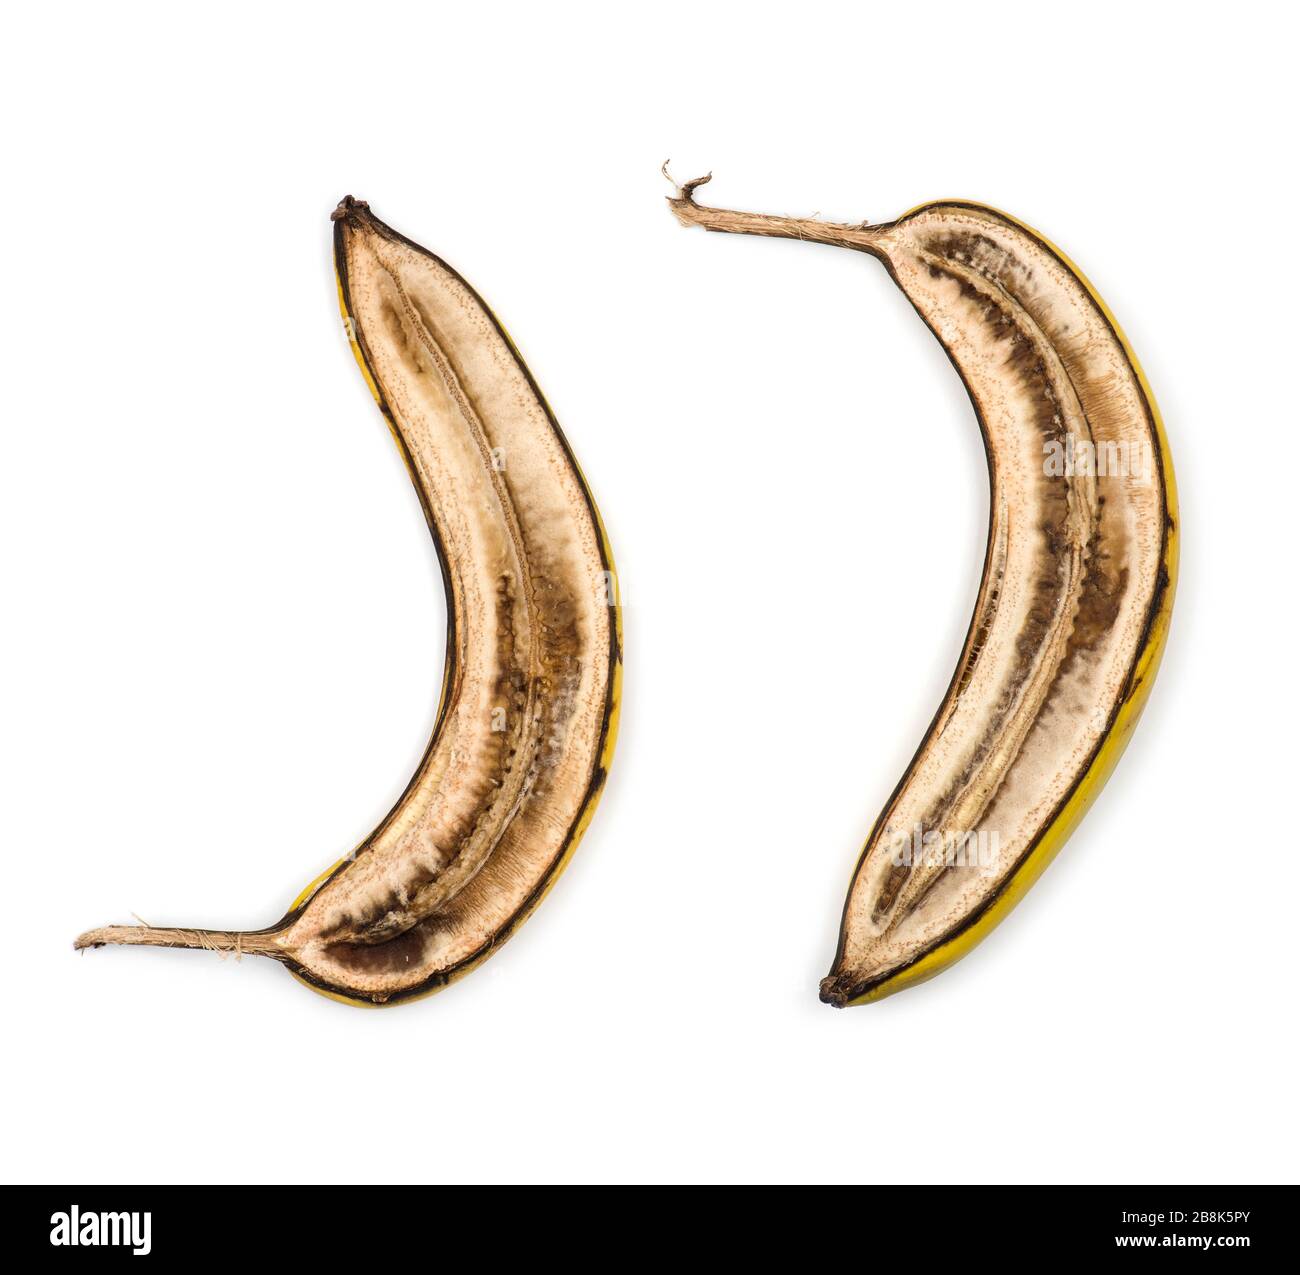 Arsenal News - Alexandre Lacazette 'bruised banana' Adidas concept